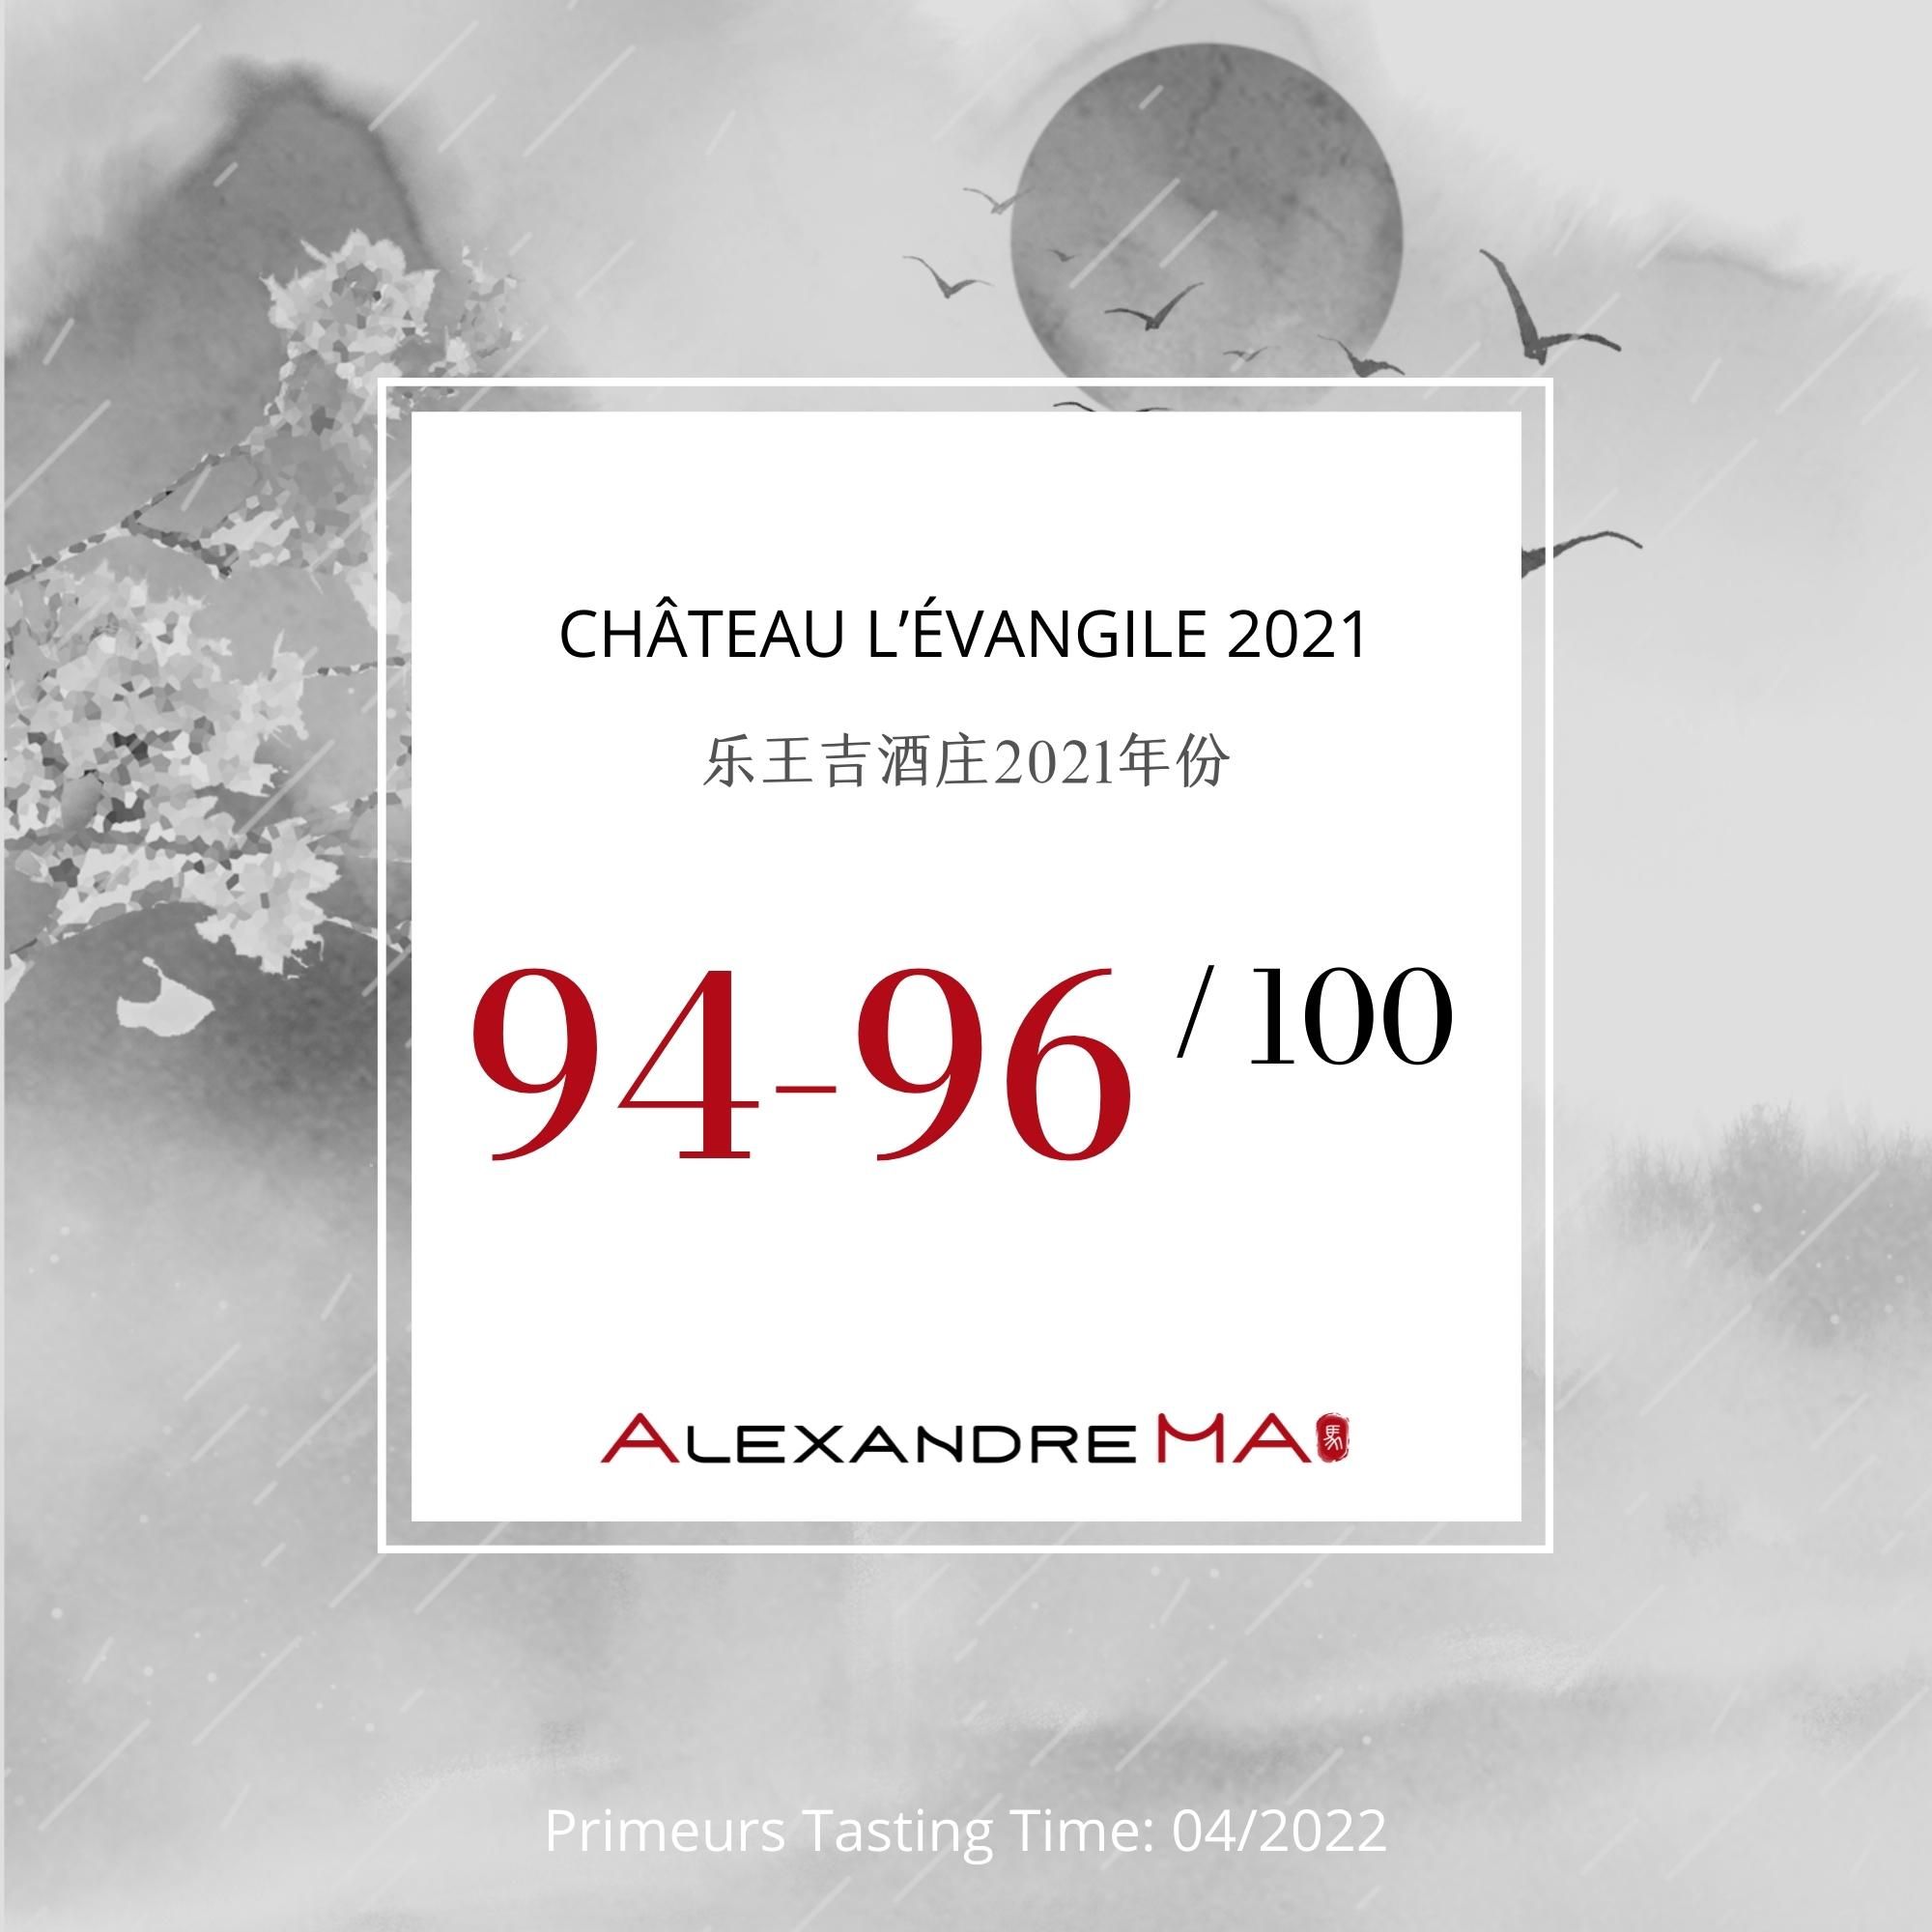 Château l’Évangile 2021 - Alexandre MA